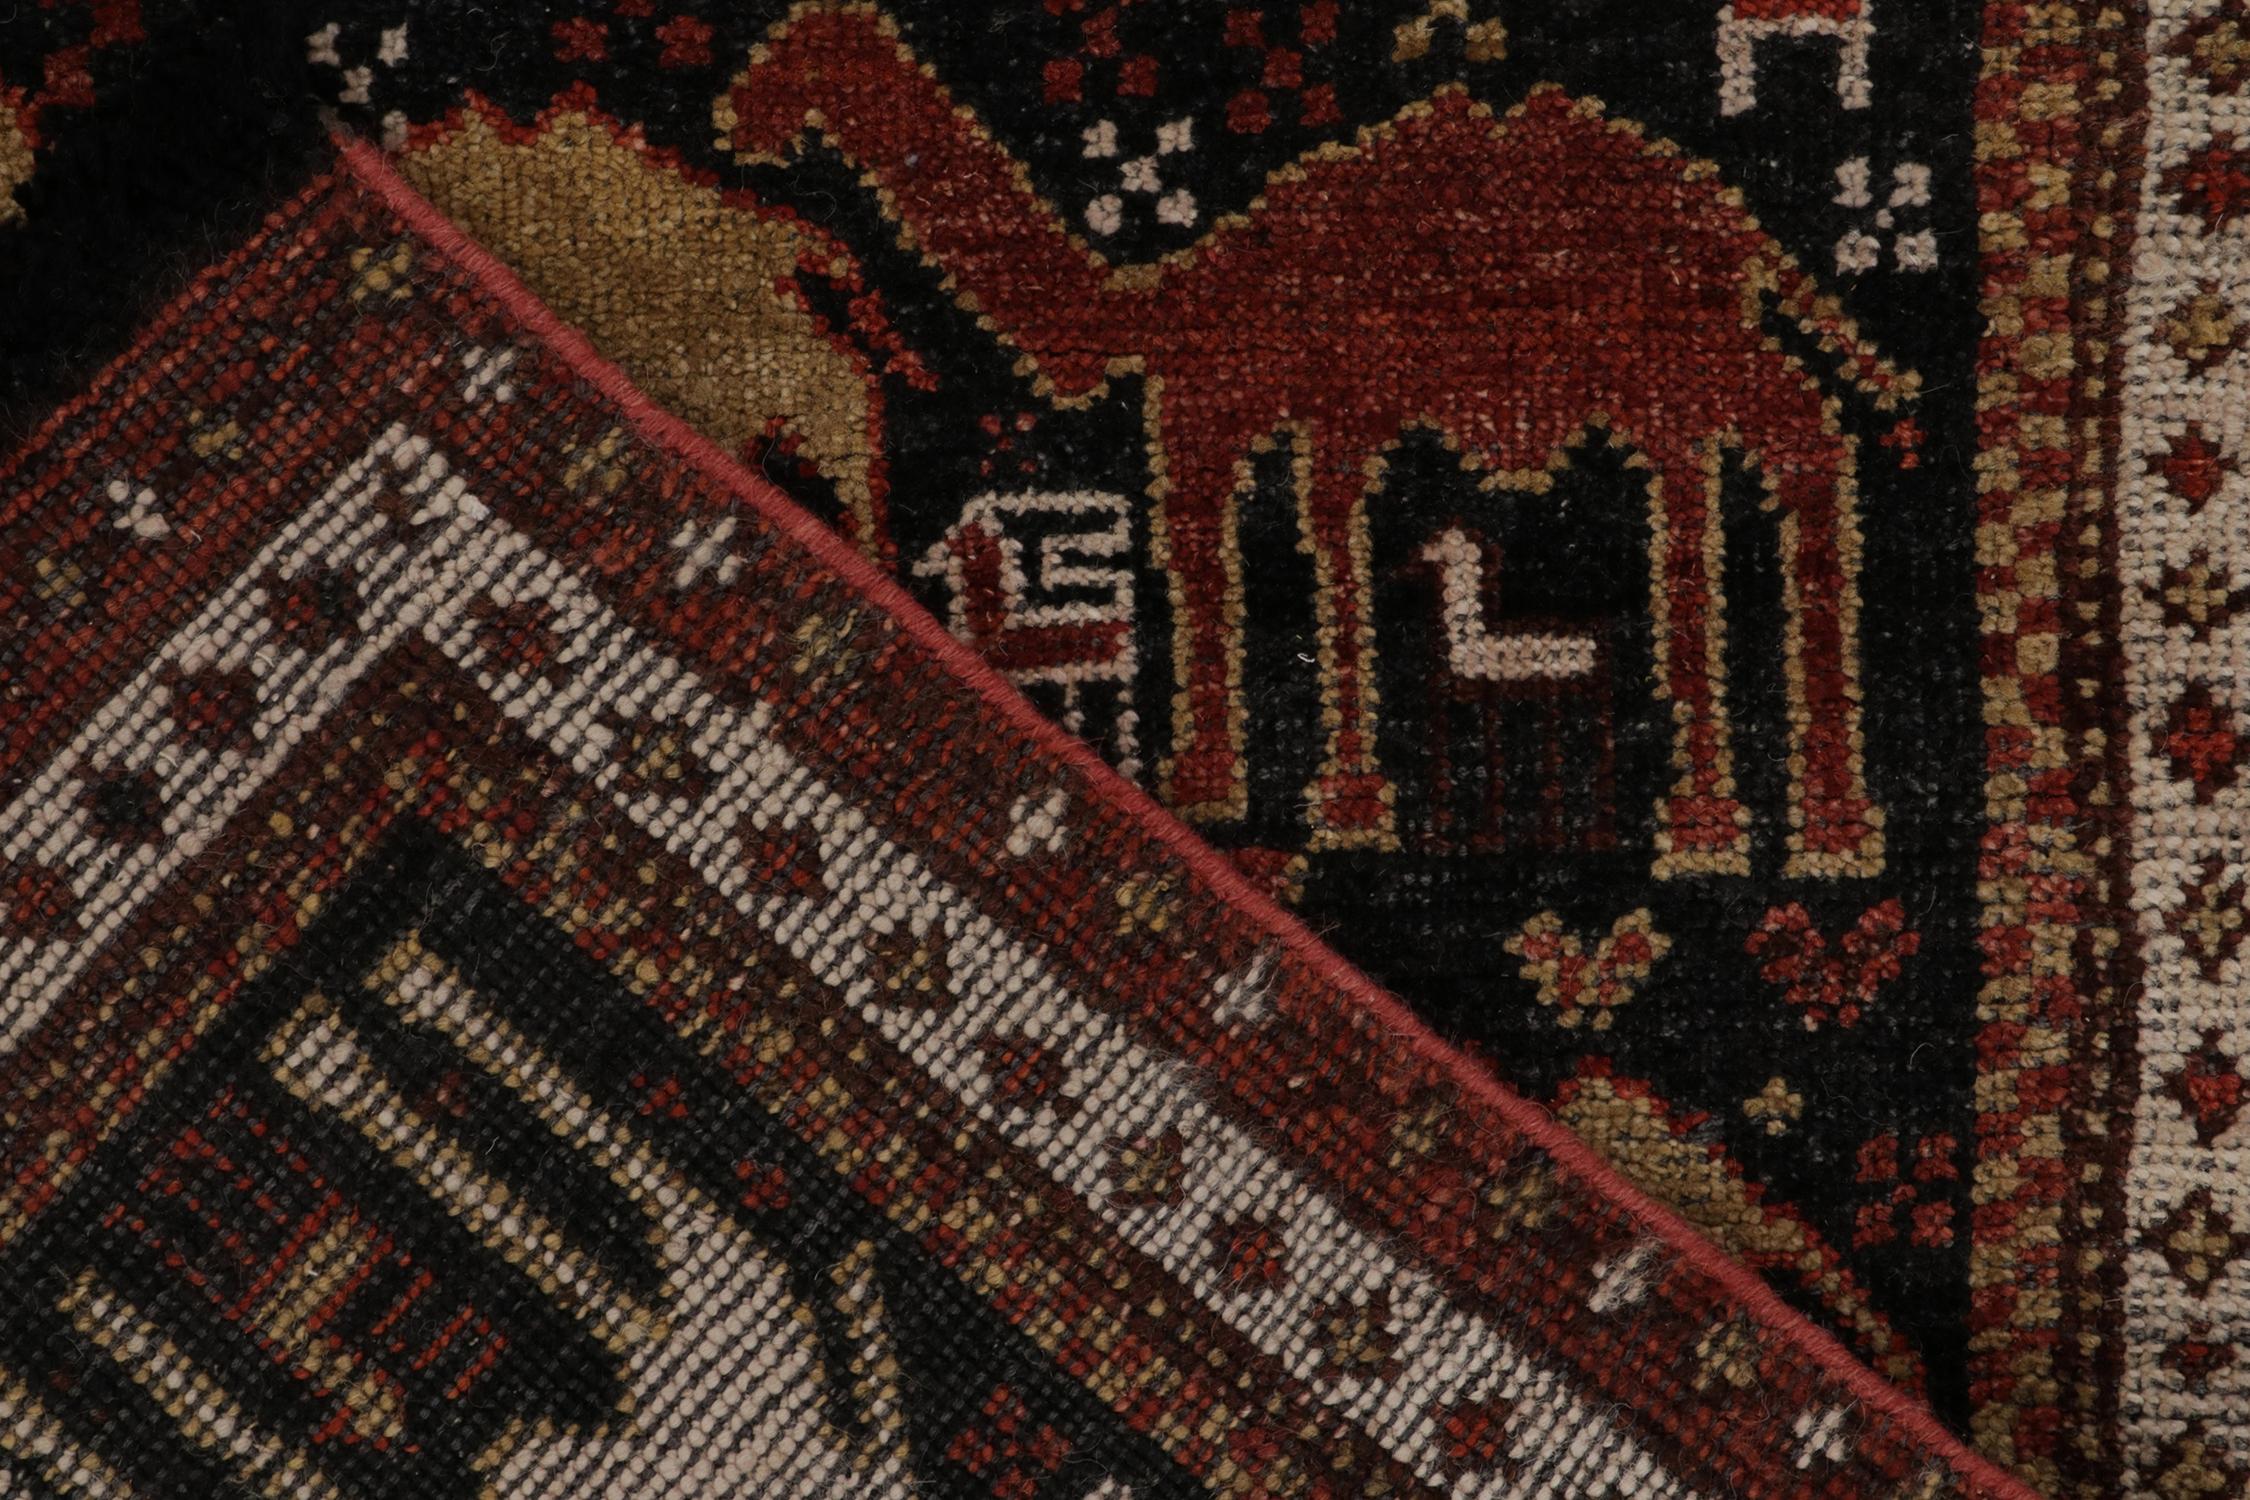 Wool Rug & Kilim’s Shirvan Tribal Style Rug in Red, Orange & Brown Pictorial Patterns For Sale